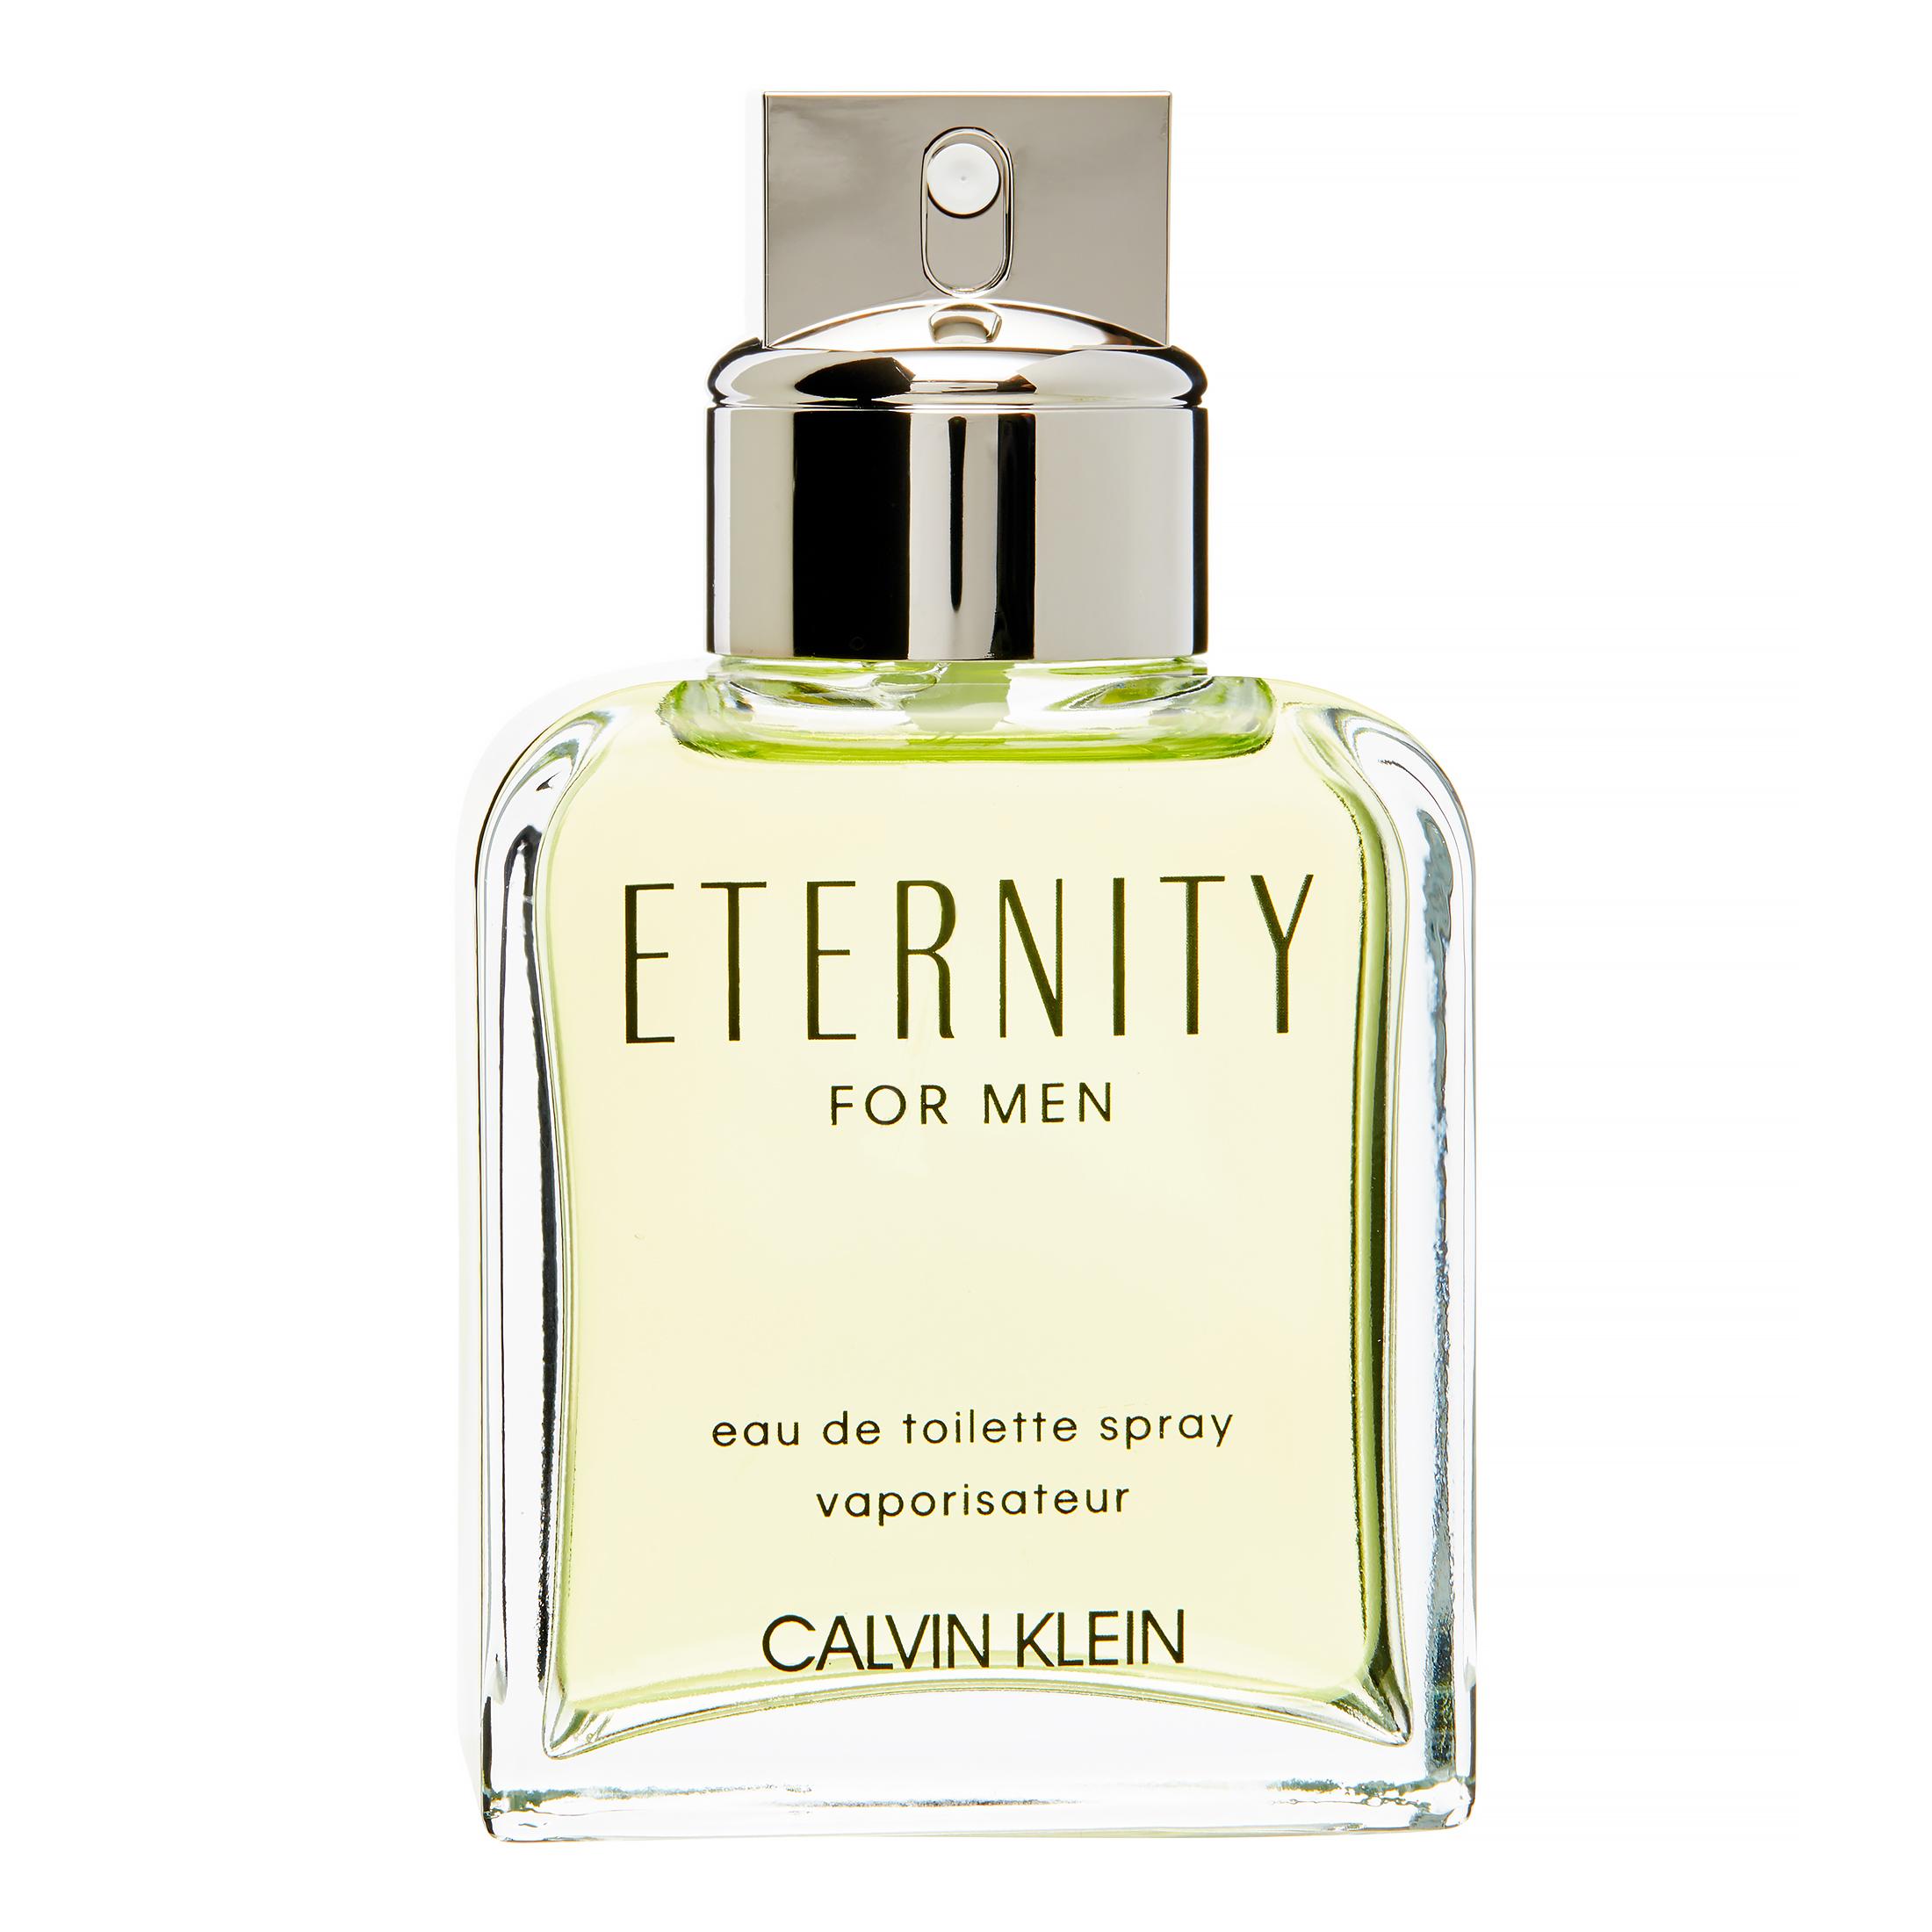 Eternity by Calvin Klein for Men Eau De Toilette Spray for $26.91